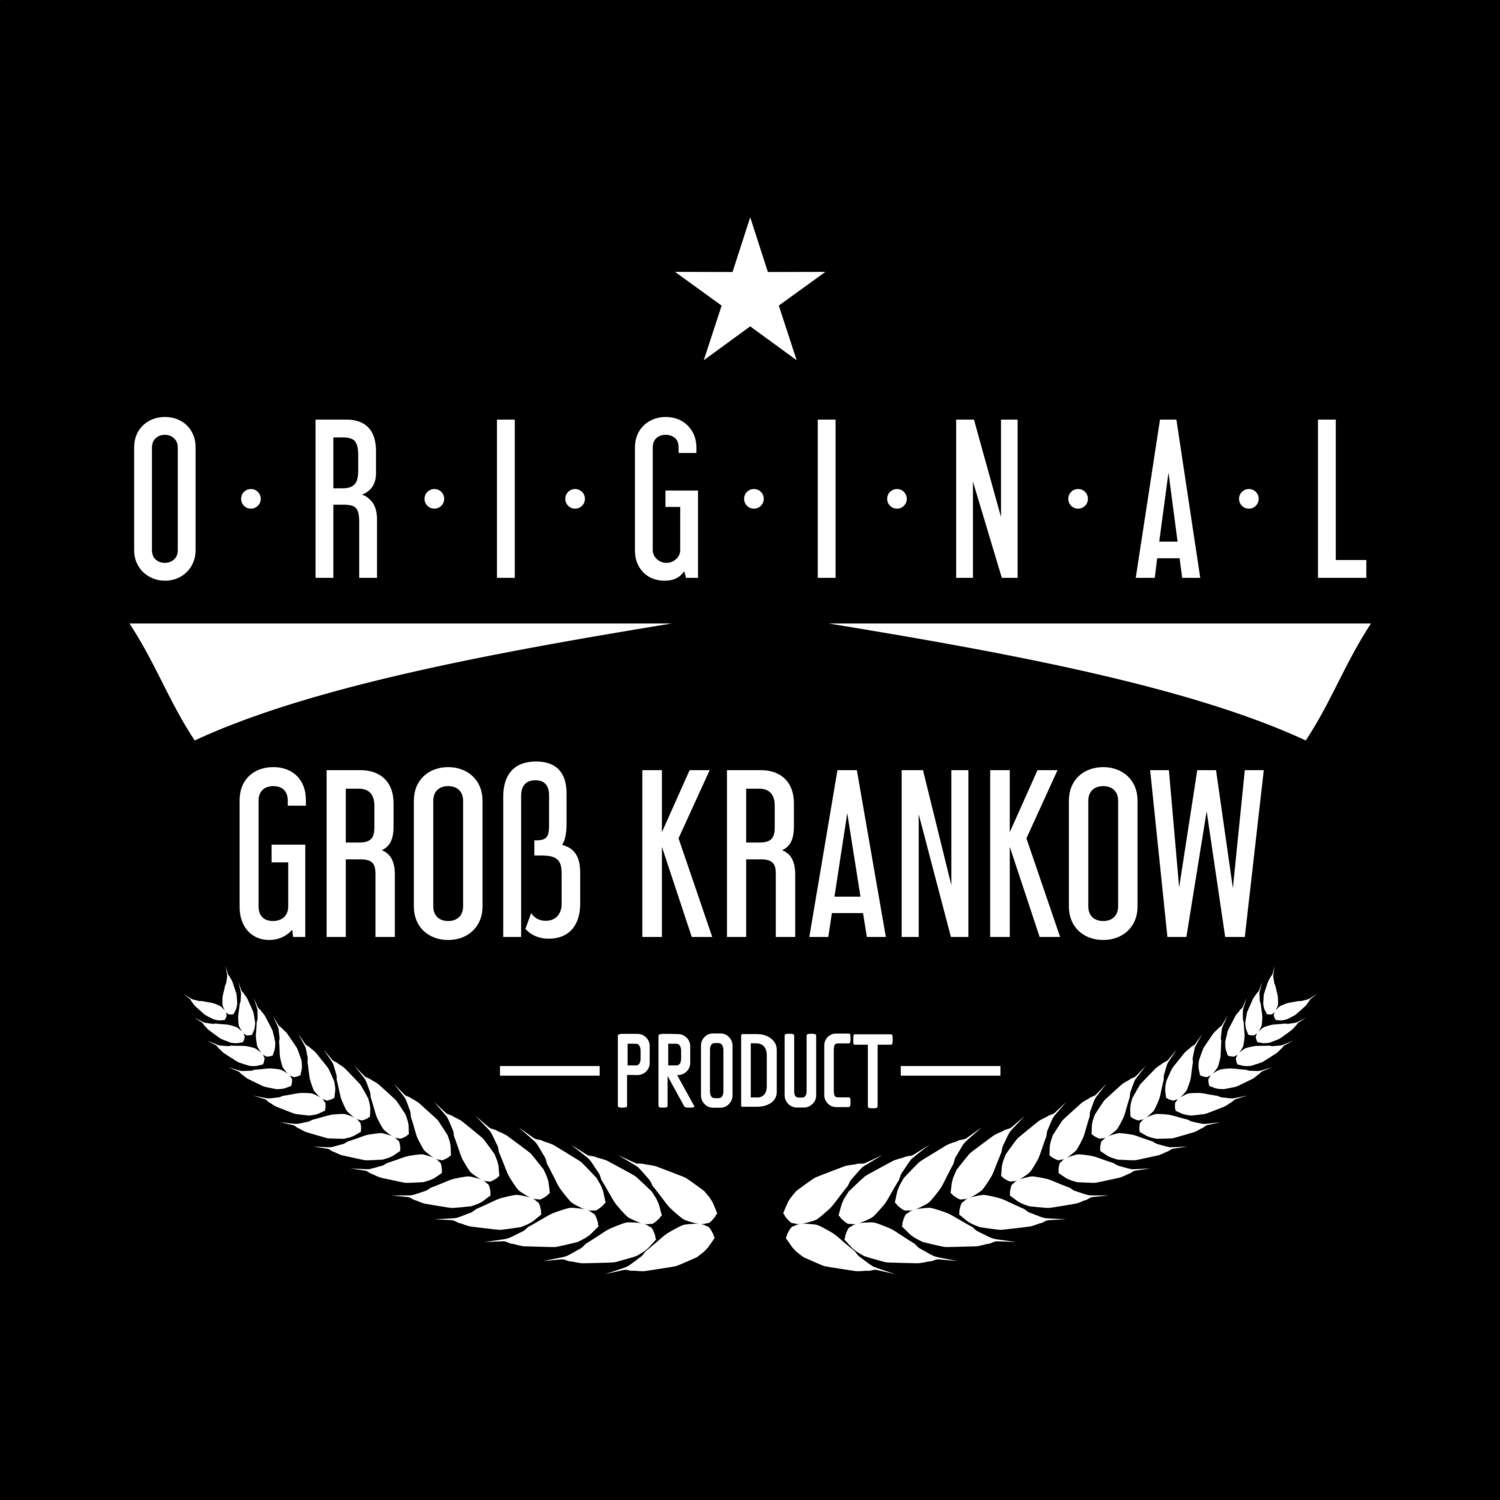 Groß Krankow T-Shirt »Original Product«